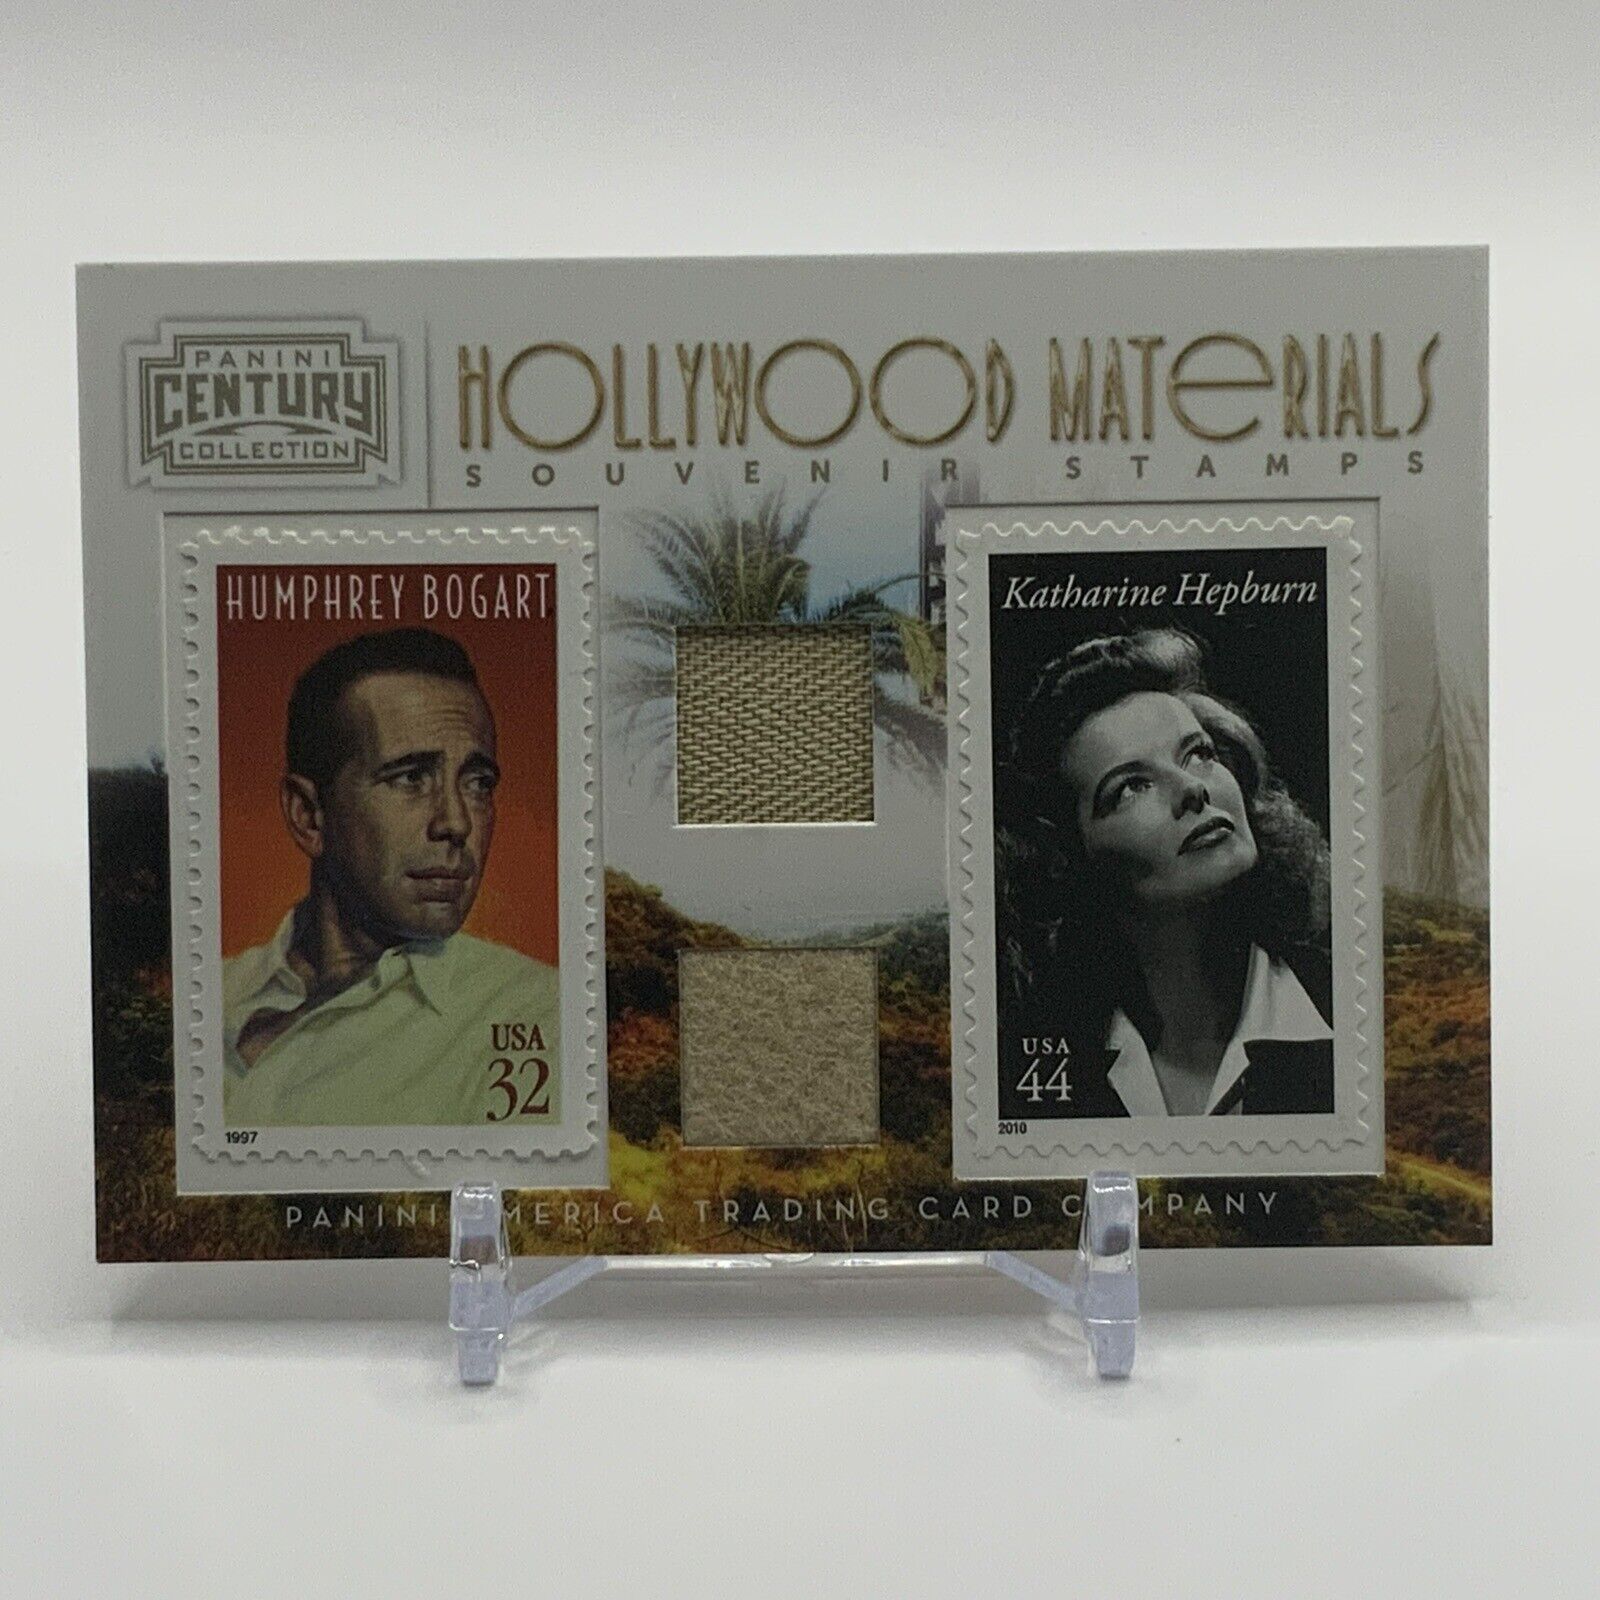 2010 Panini Hollywood Materials - Humphrey Bogart And Katharine Hepburn -102/250